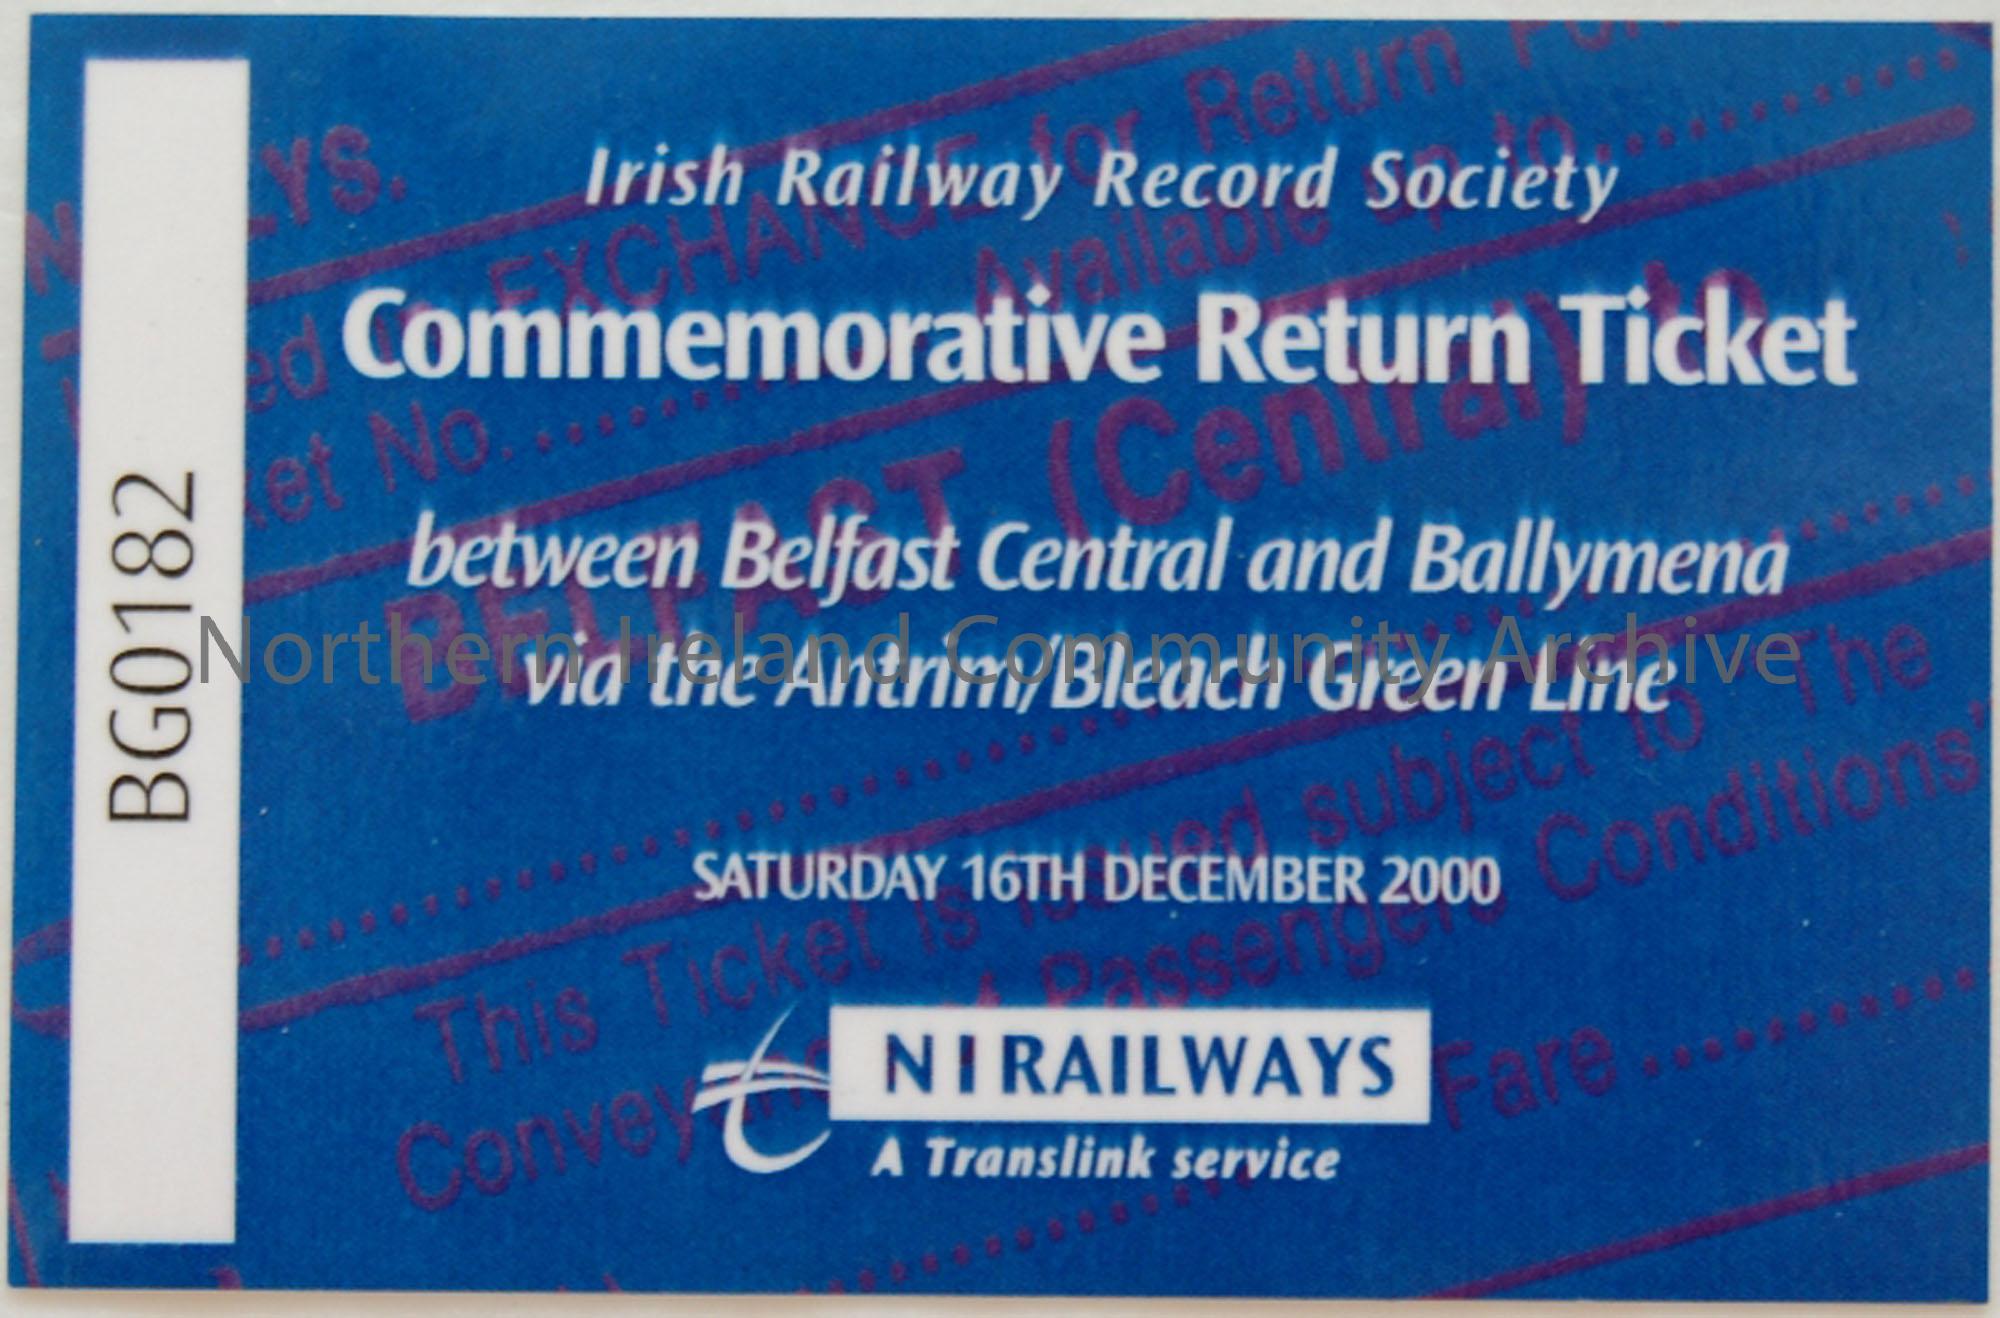 Commemorative return ticket between Belfast Central and Ballymena via the Antrim/Bleach Green Line. Saturday 16th December 2000